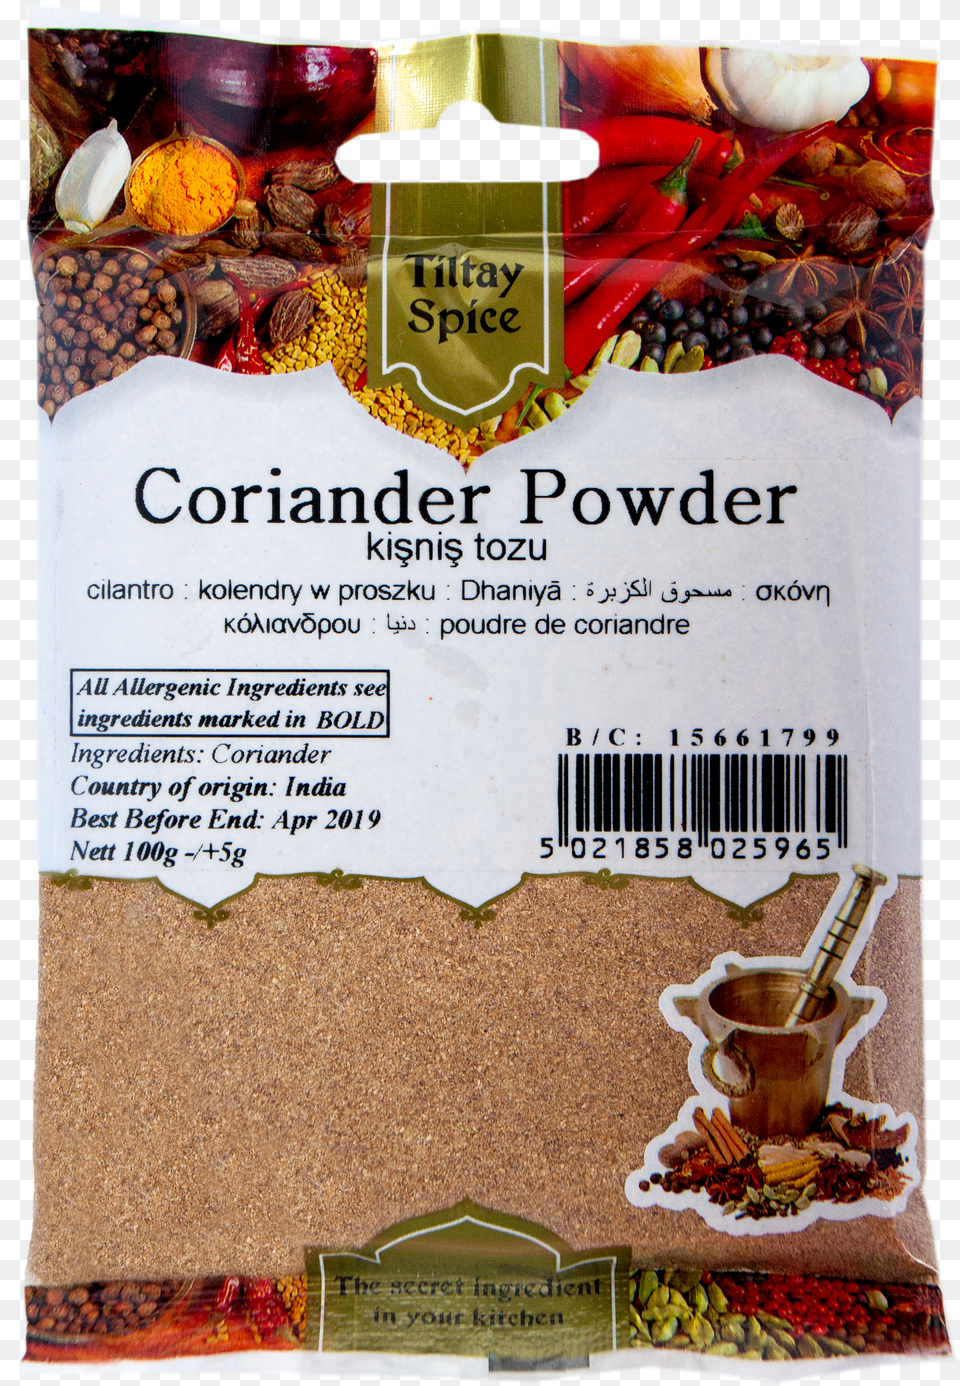 Tiltay Spice Coriander Powder Coriander Uk Spice Png Image